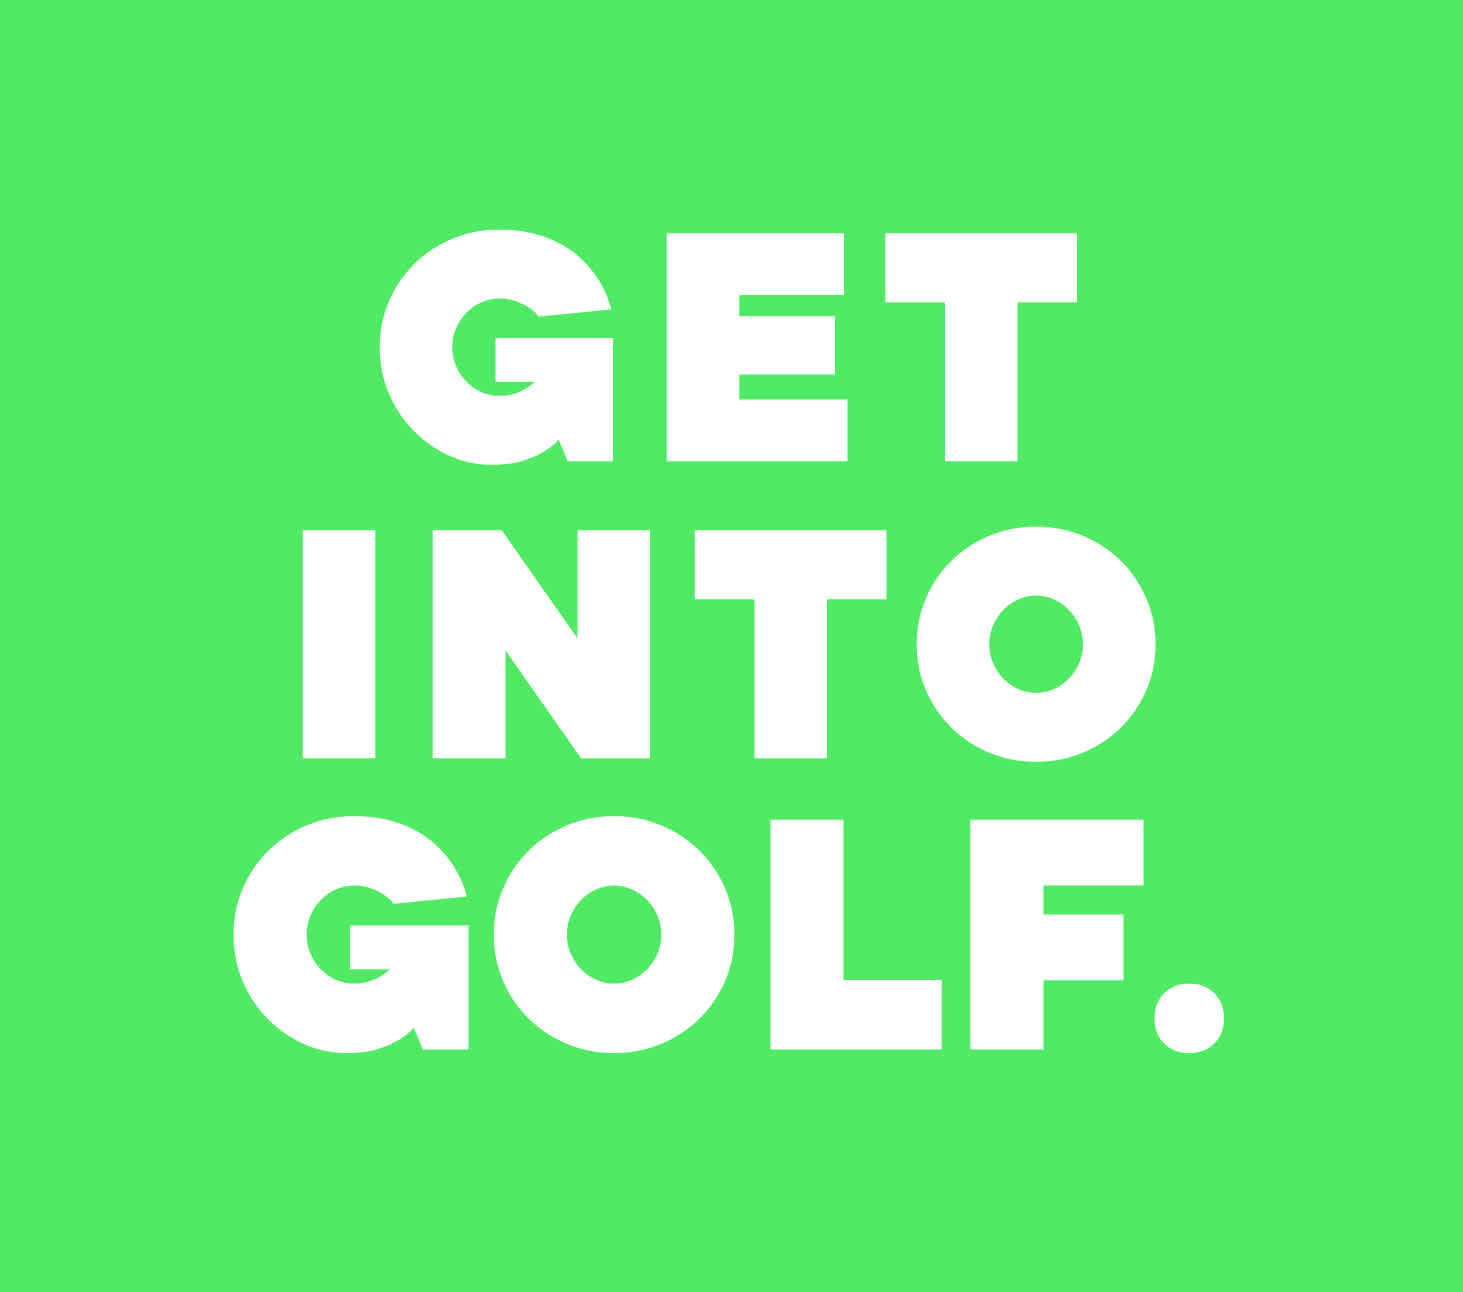 Get Into Golf